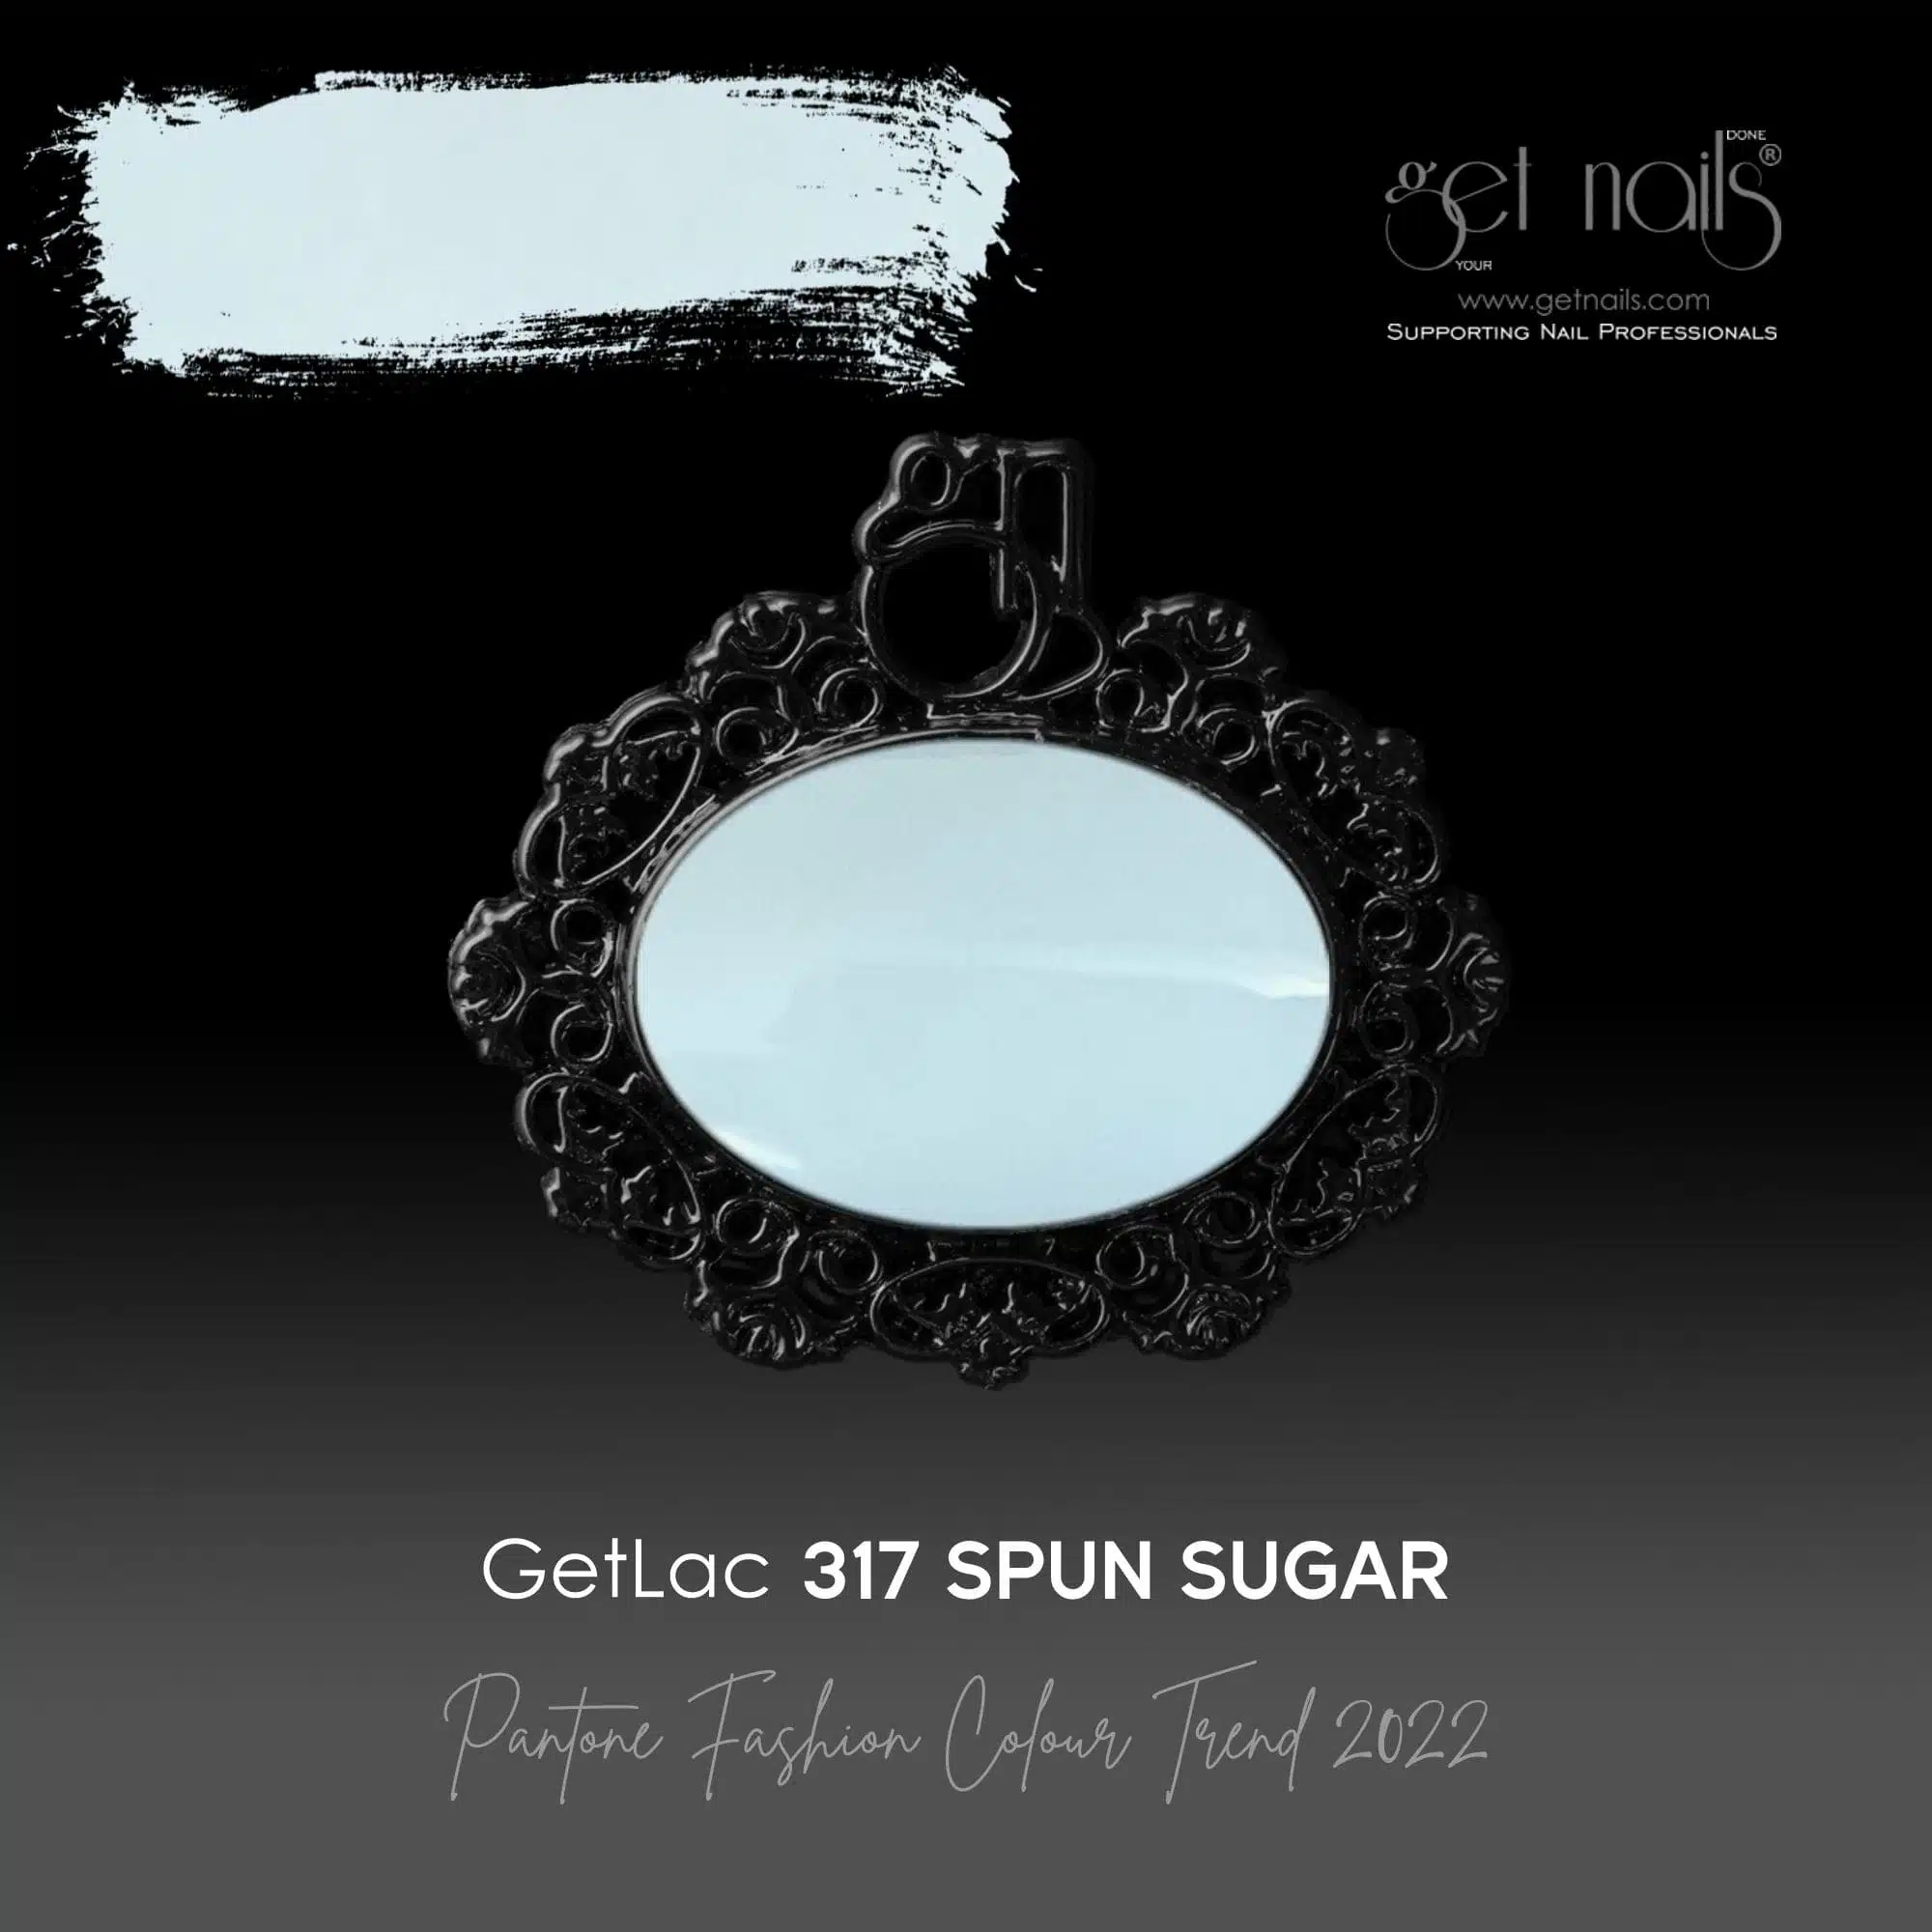 Get Nails Austria - GetLac 317 Spun Sugar 15g